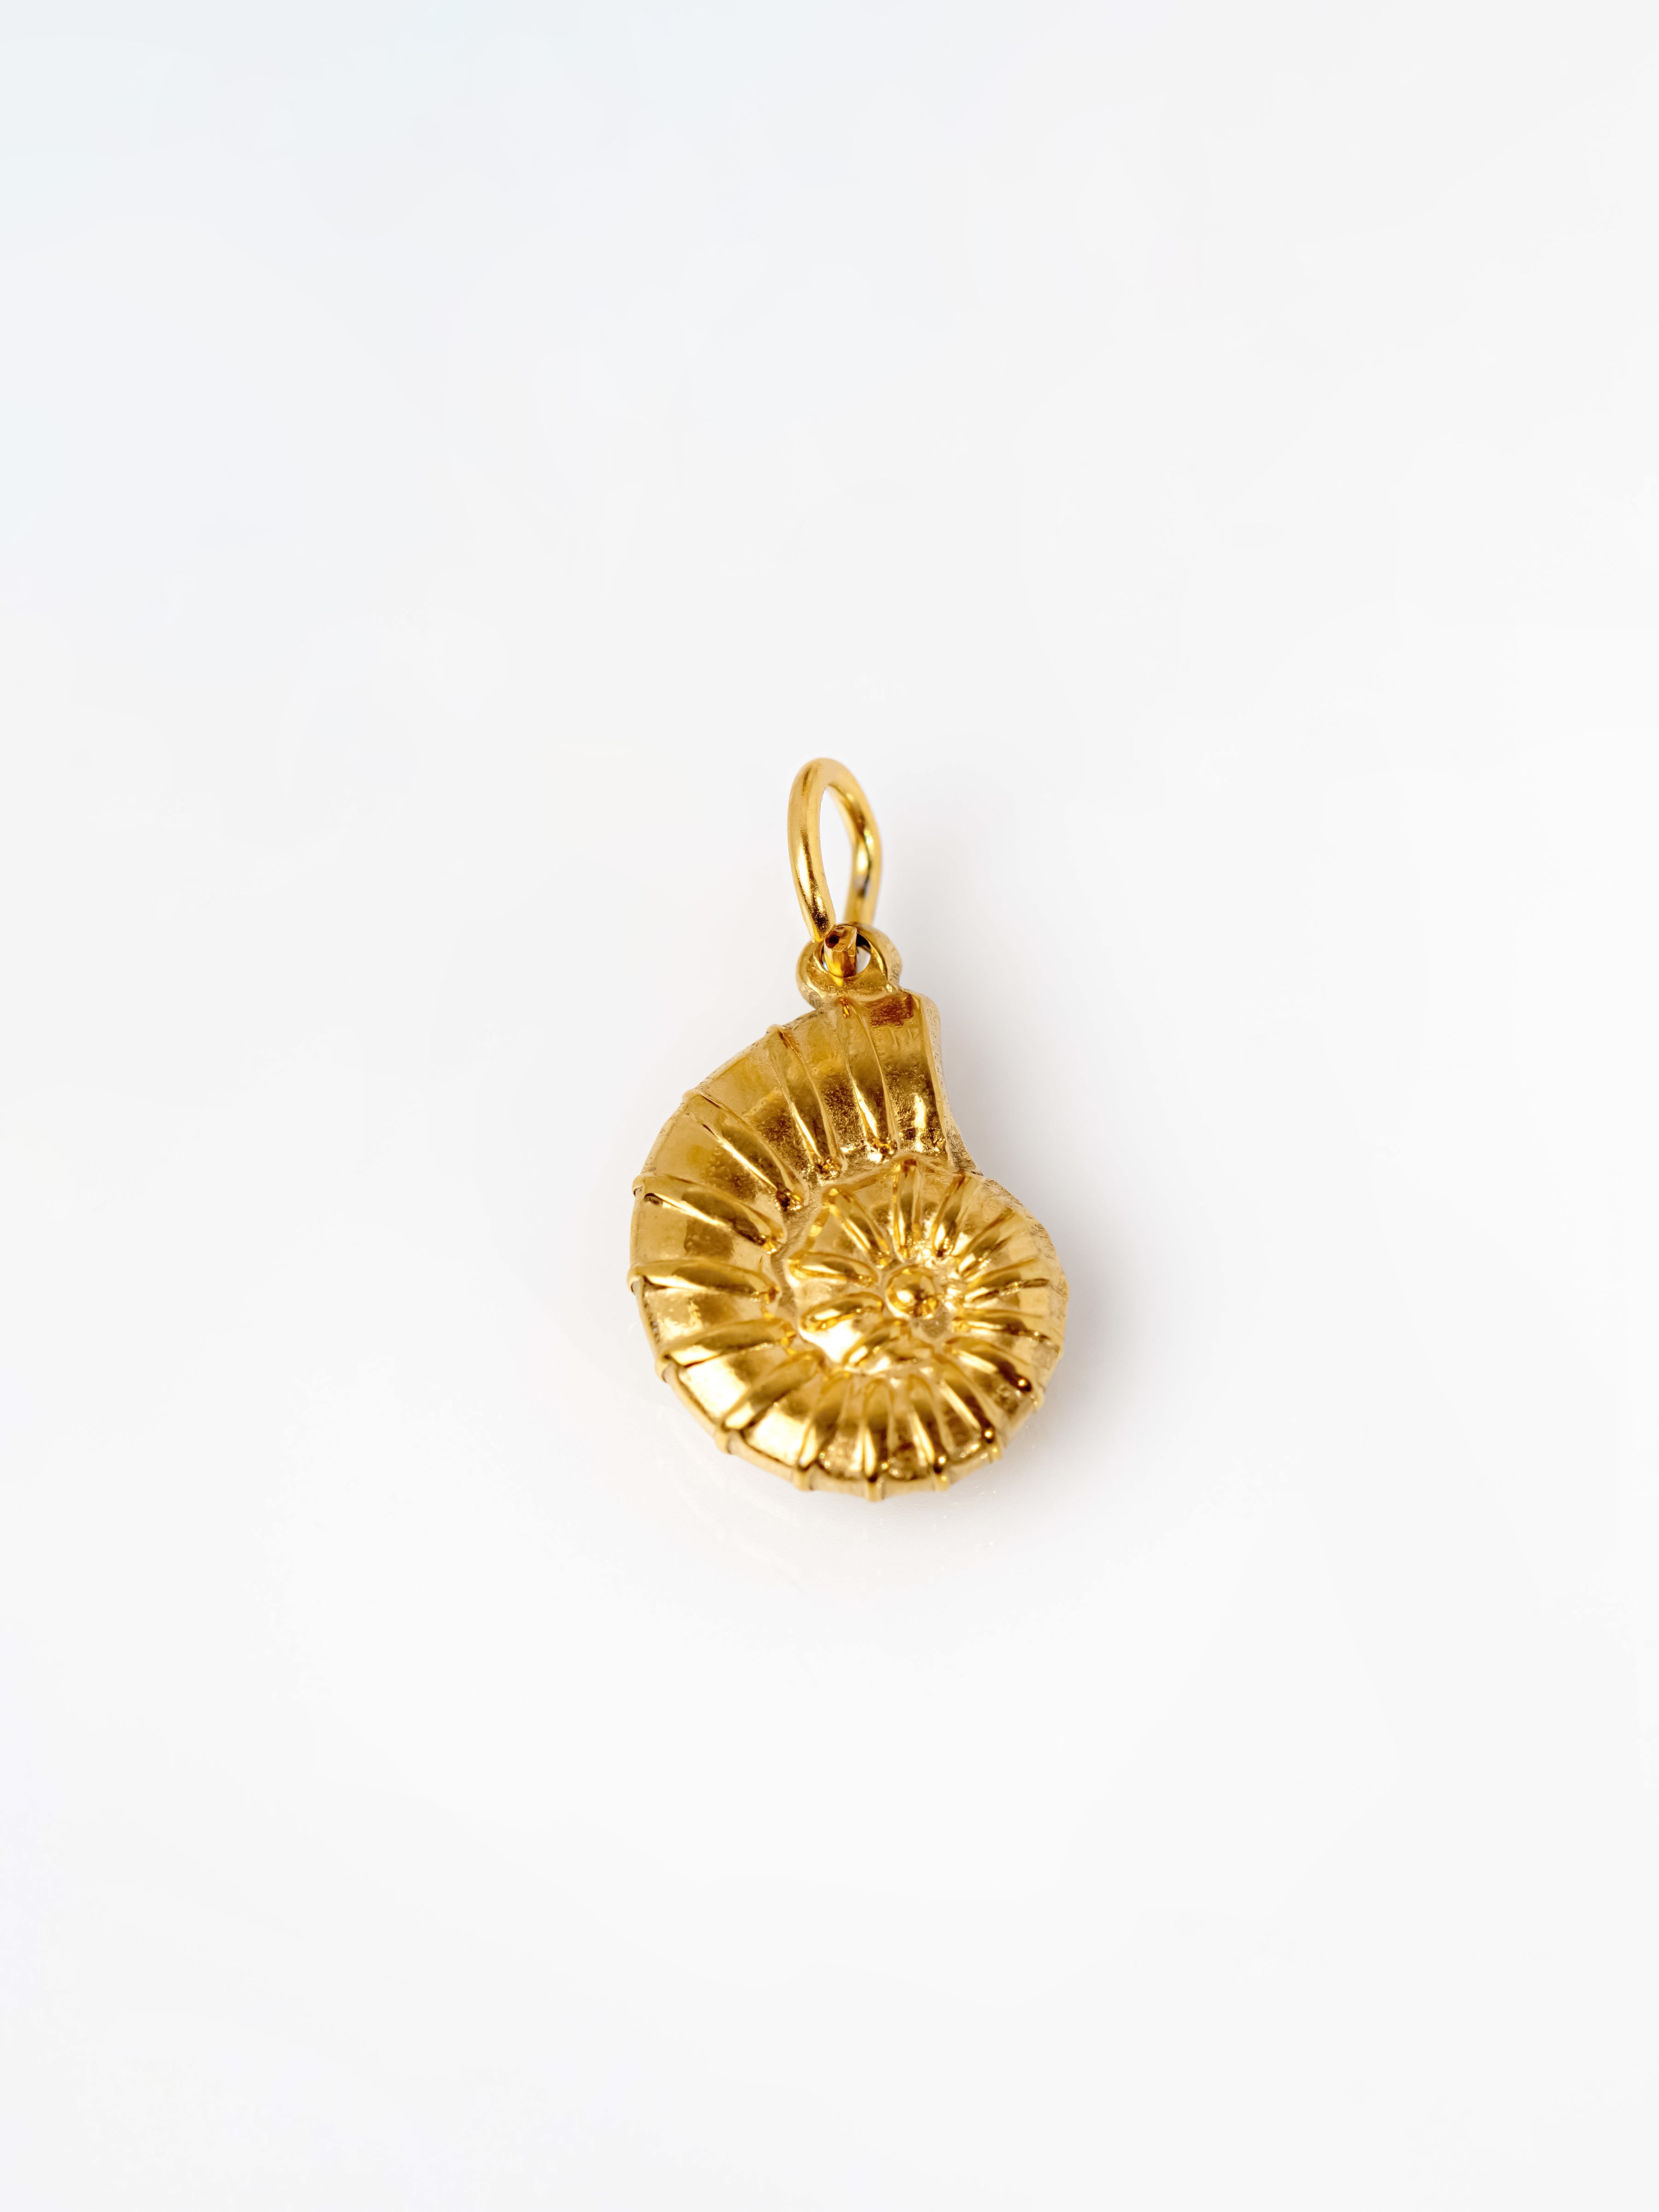 Gold Articulate Harp Sea Shell Pendant / Charm